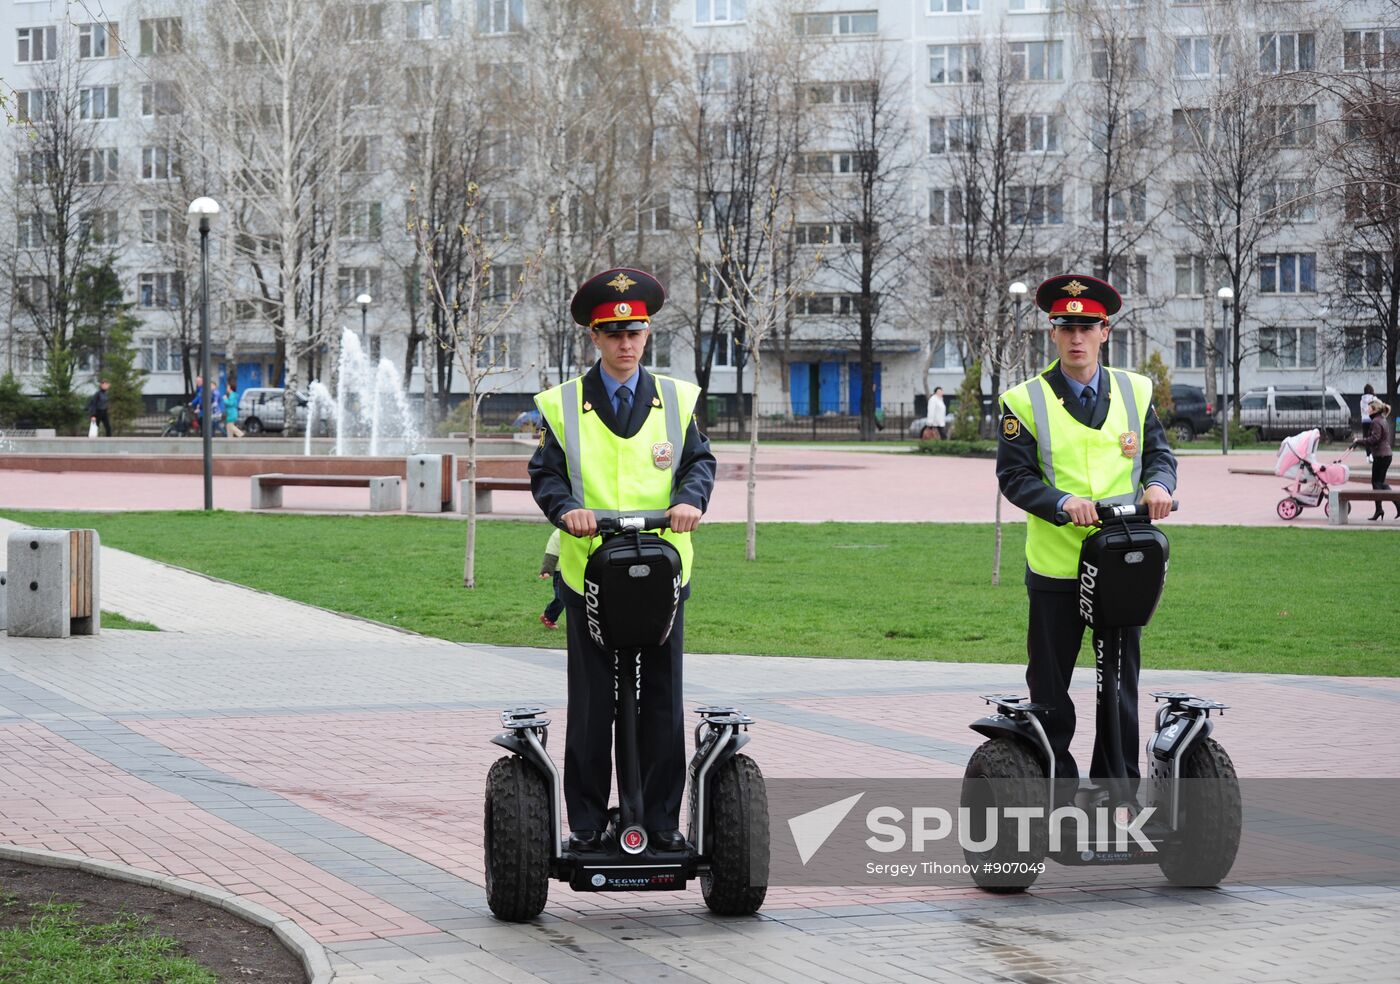 ATC staff in Naberezhnye Chelny patrol using an electric scooter